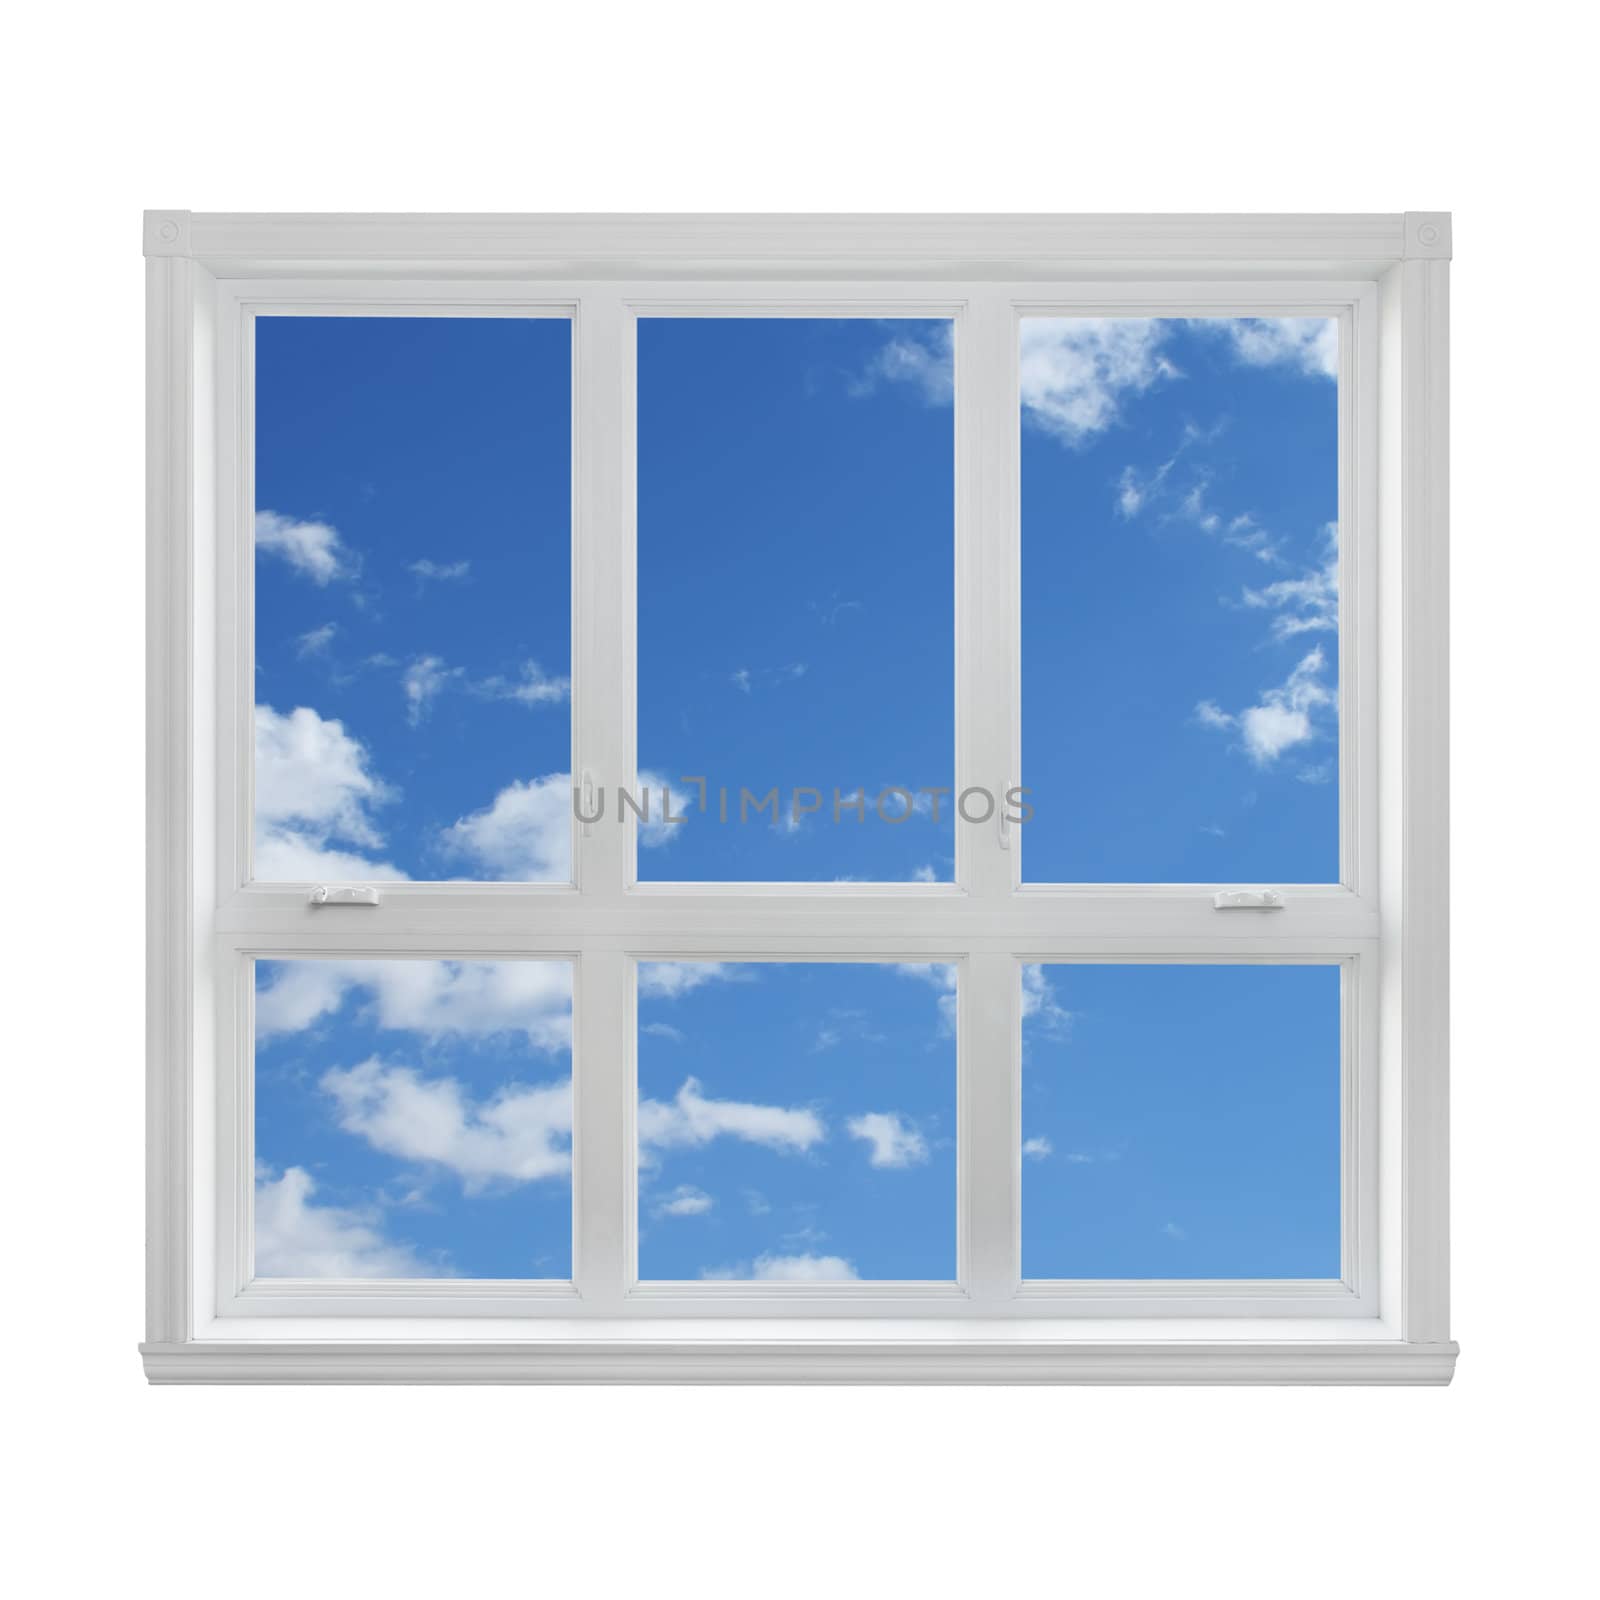 Blue sky seen through the window by anikasalsera